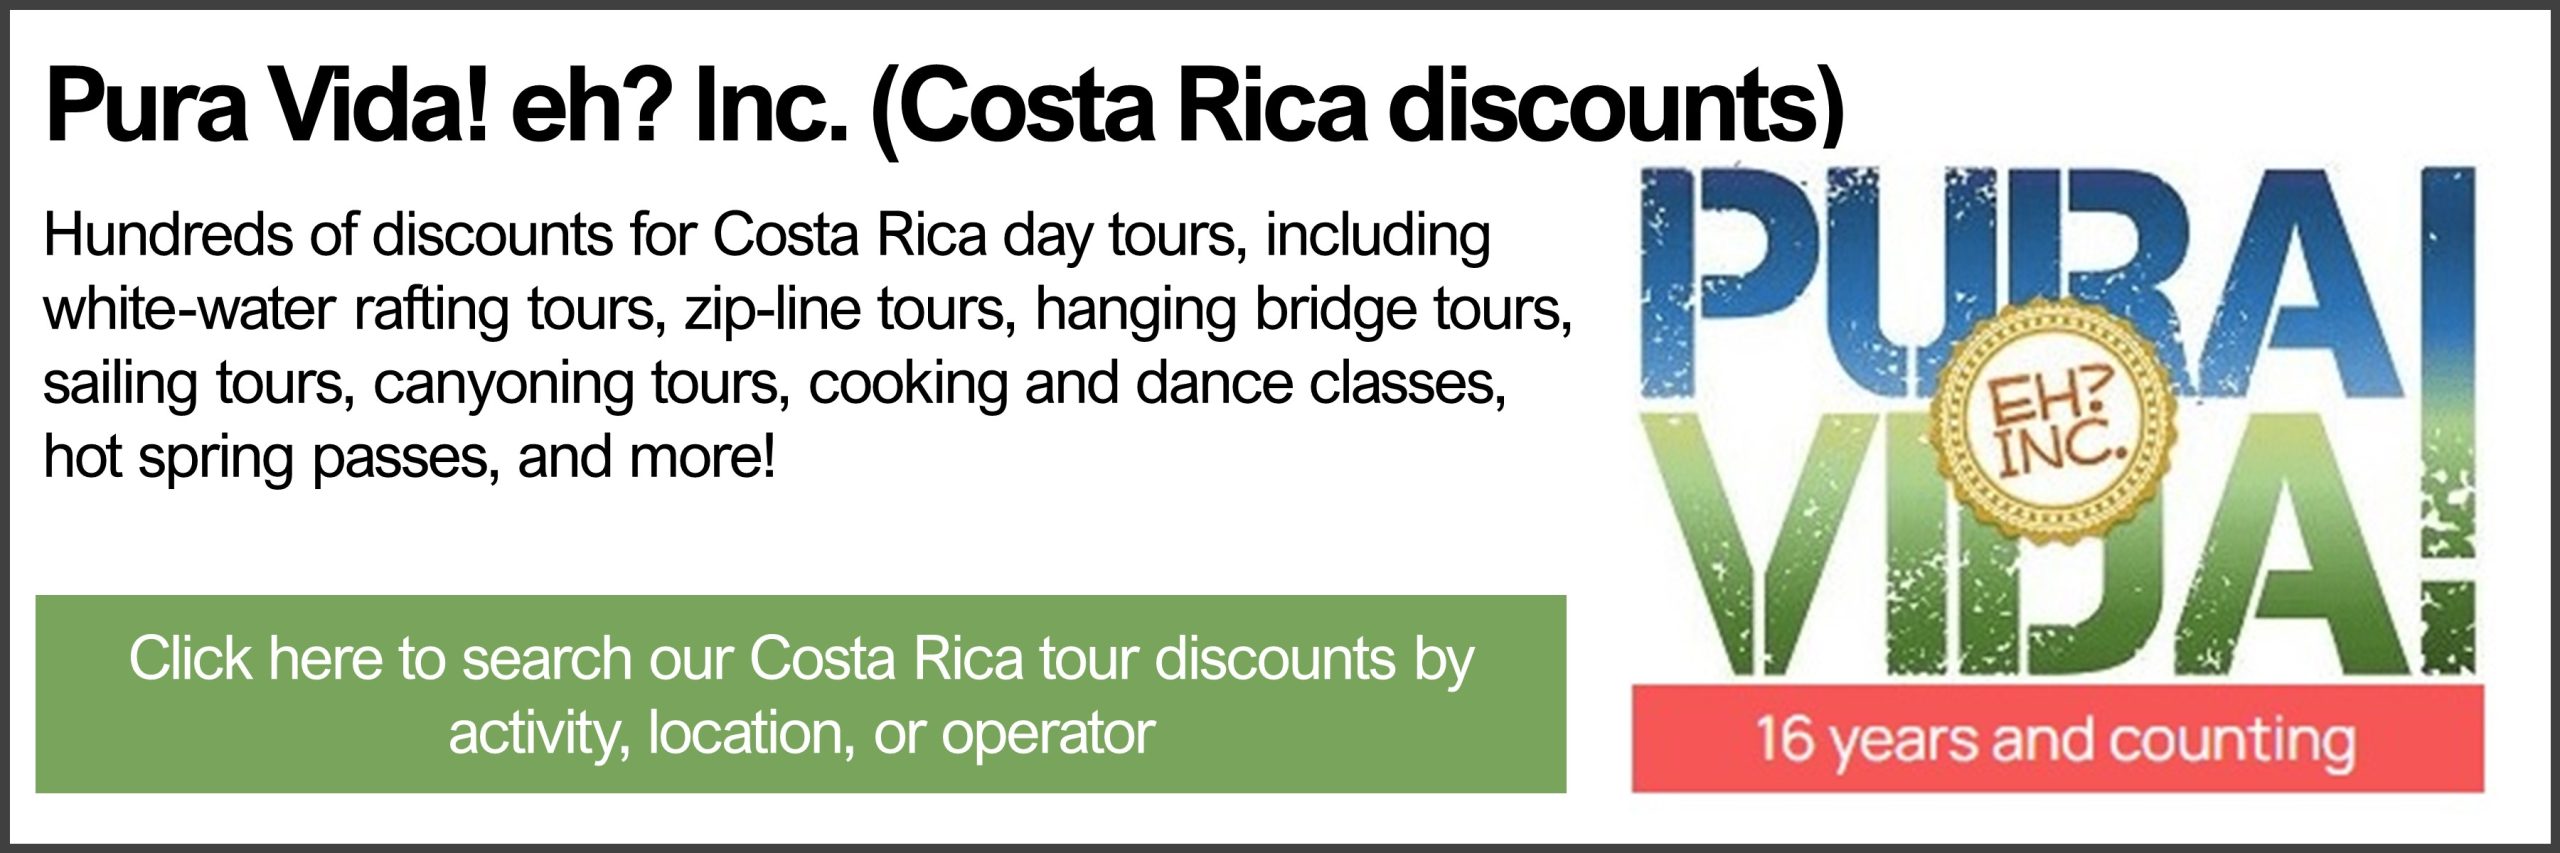 Costa Rica tour discounts